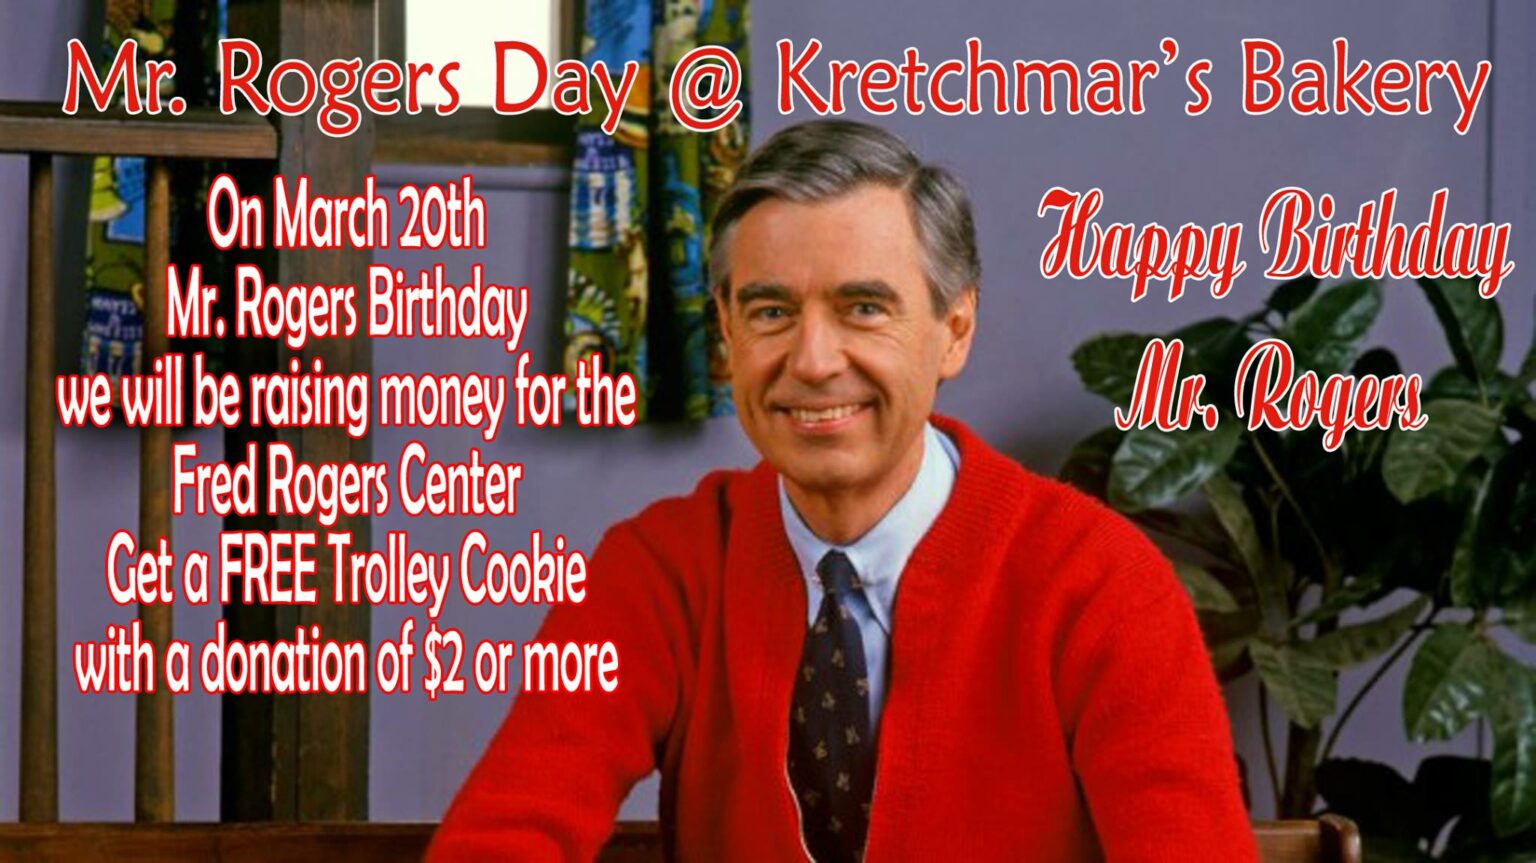 Happy Birthday Mr.Rogers Kretchmar's Bakery